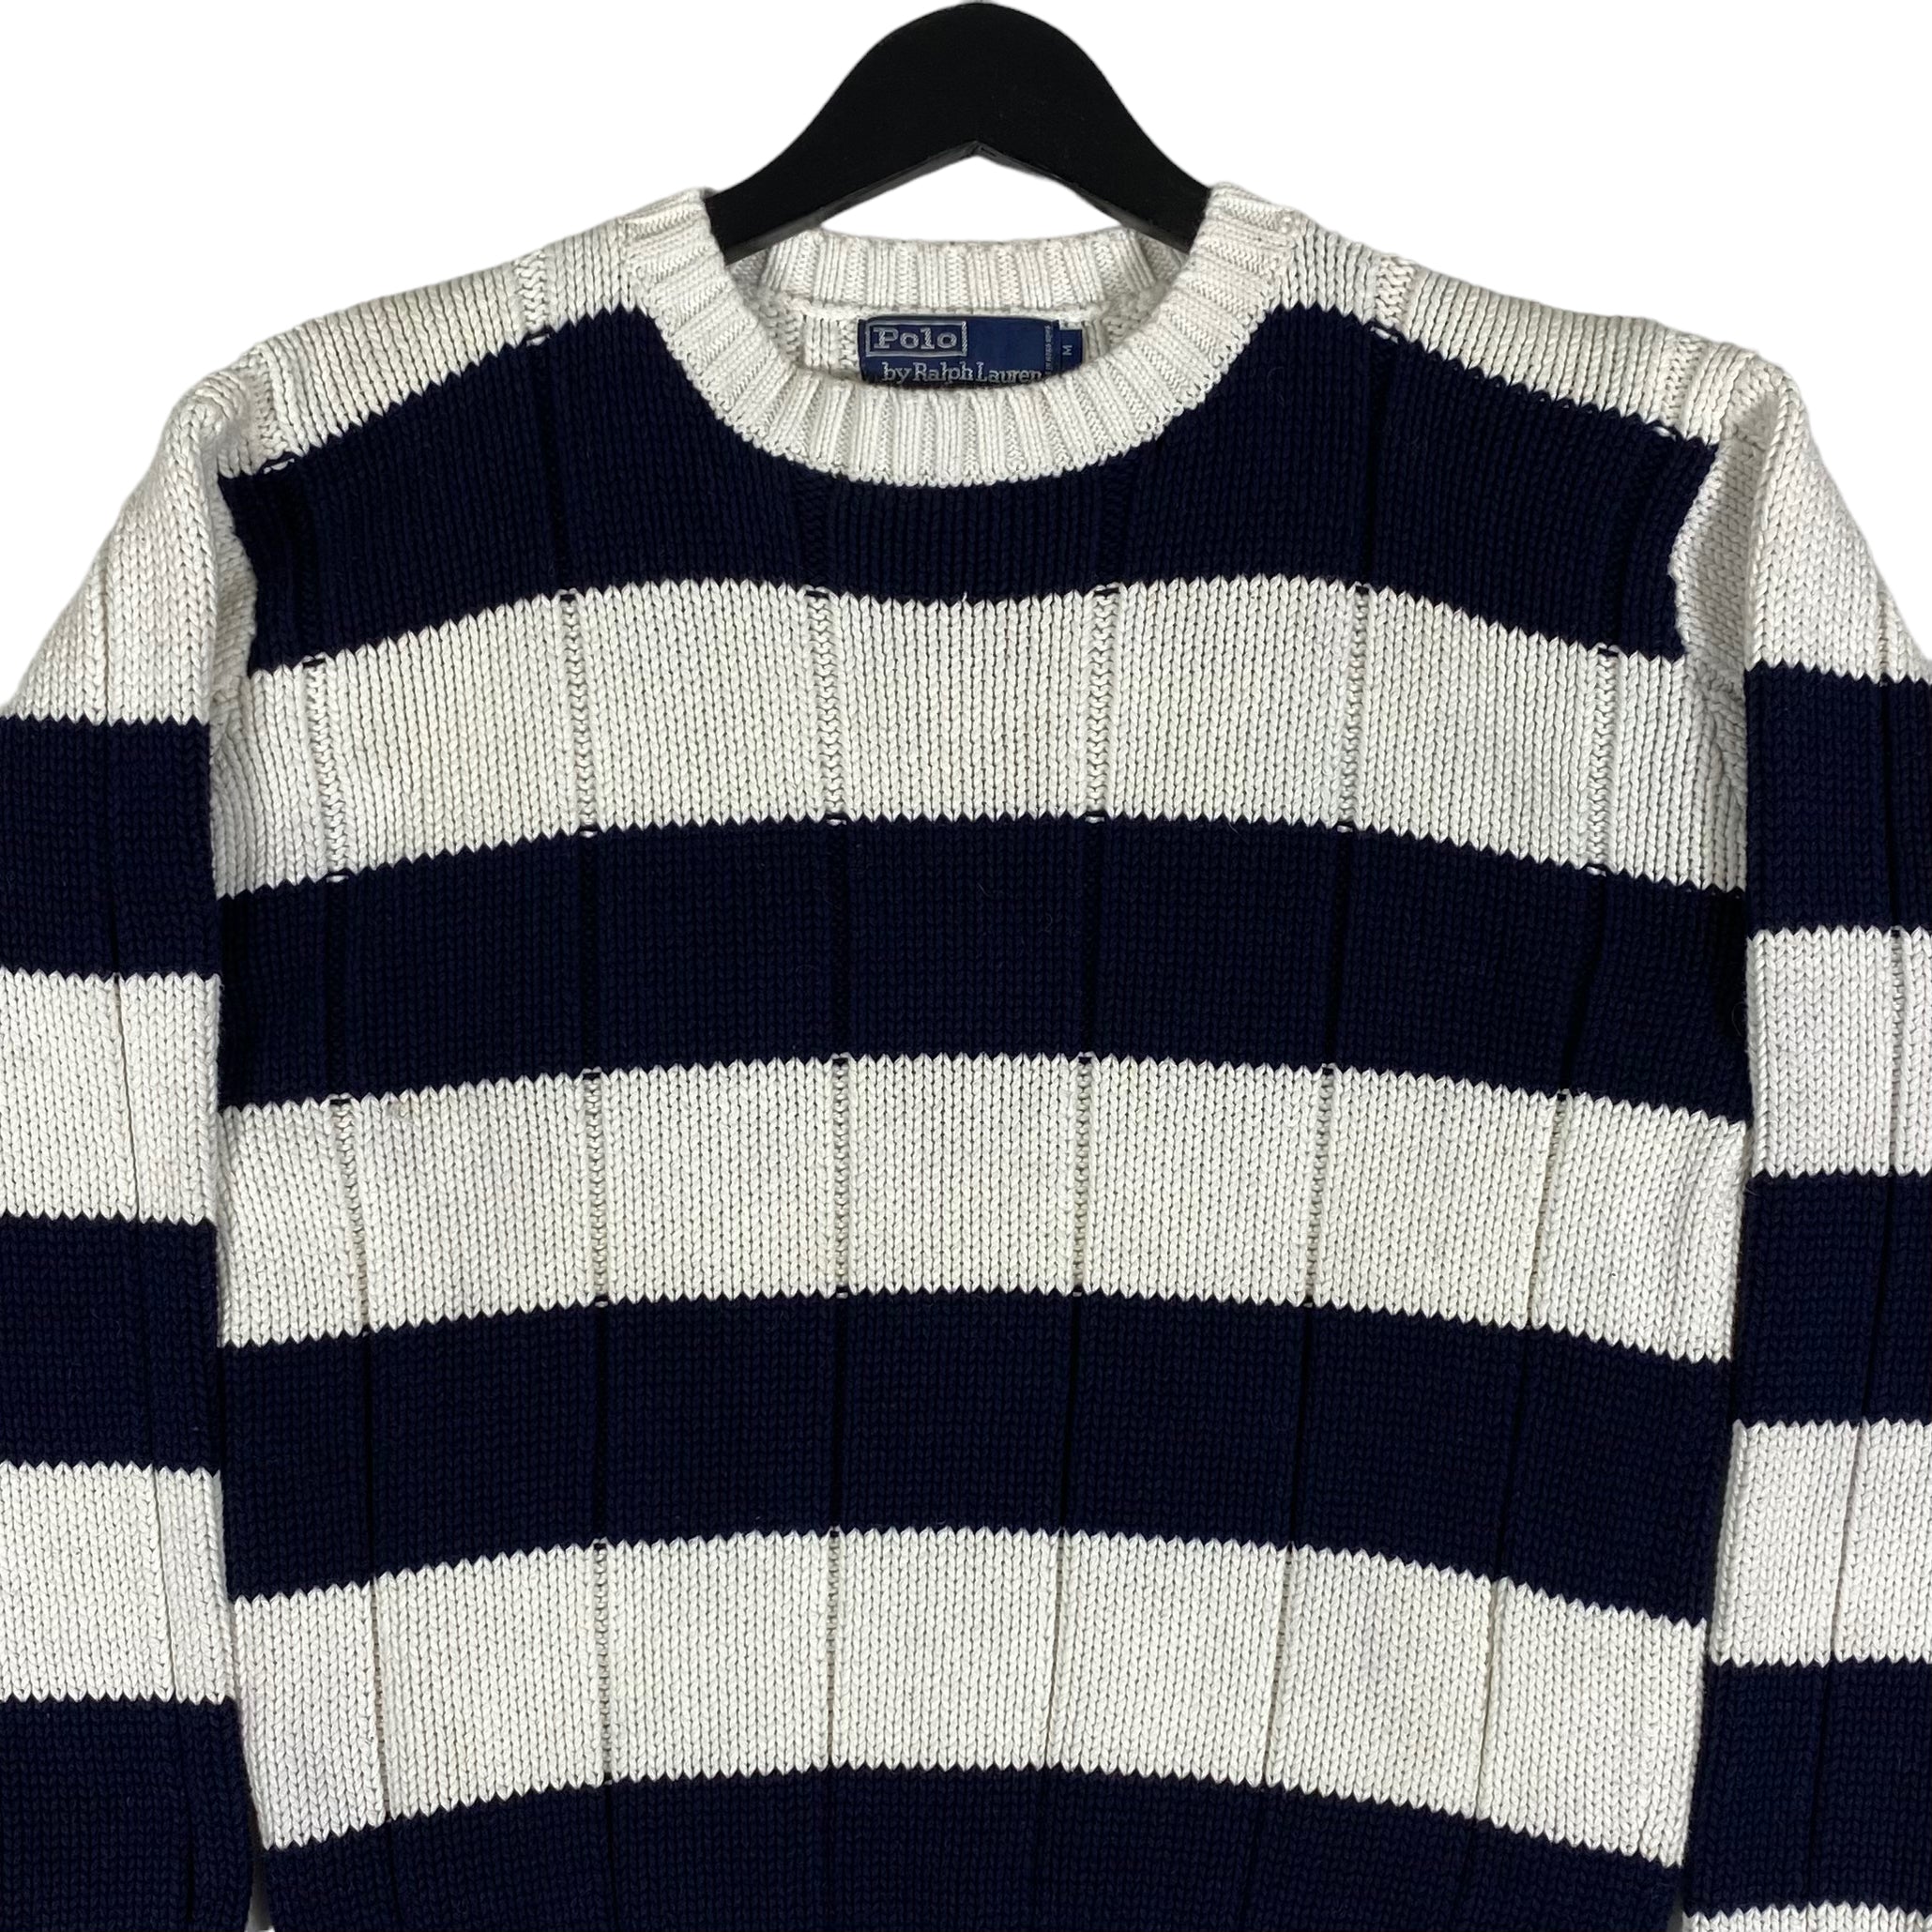 Vintage Polo Ralph Lauren Striped Cotton Knit Sweater